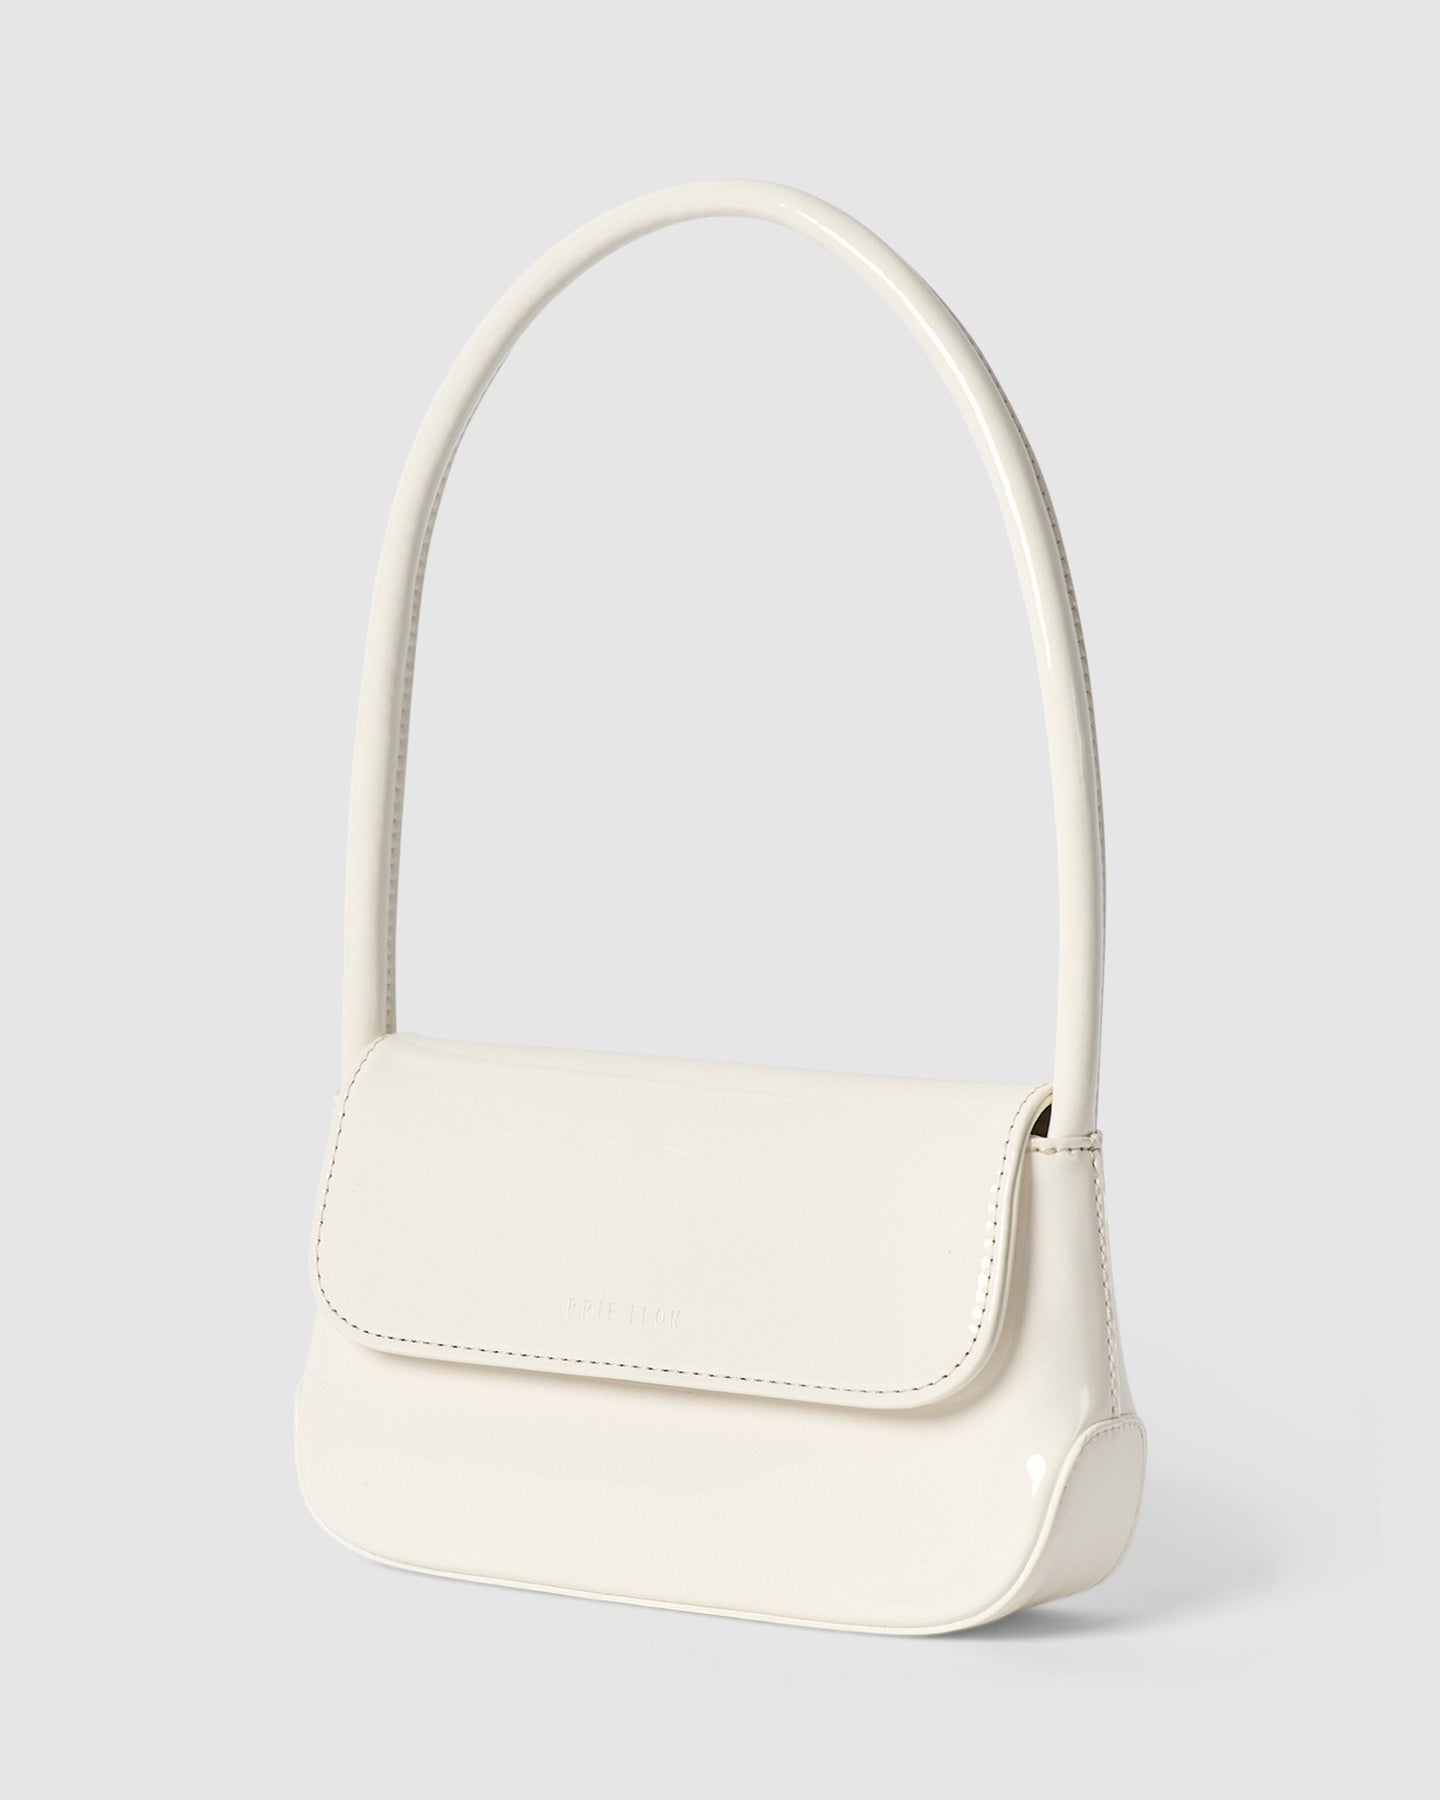 Neiman Marcus White Shoulder Bags | Mercari